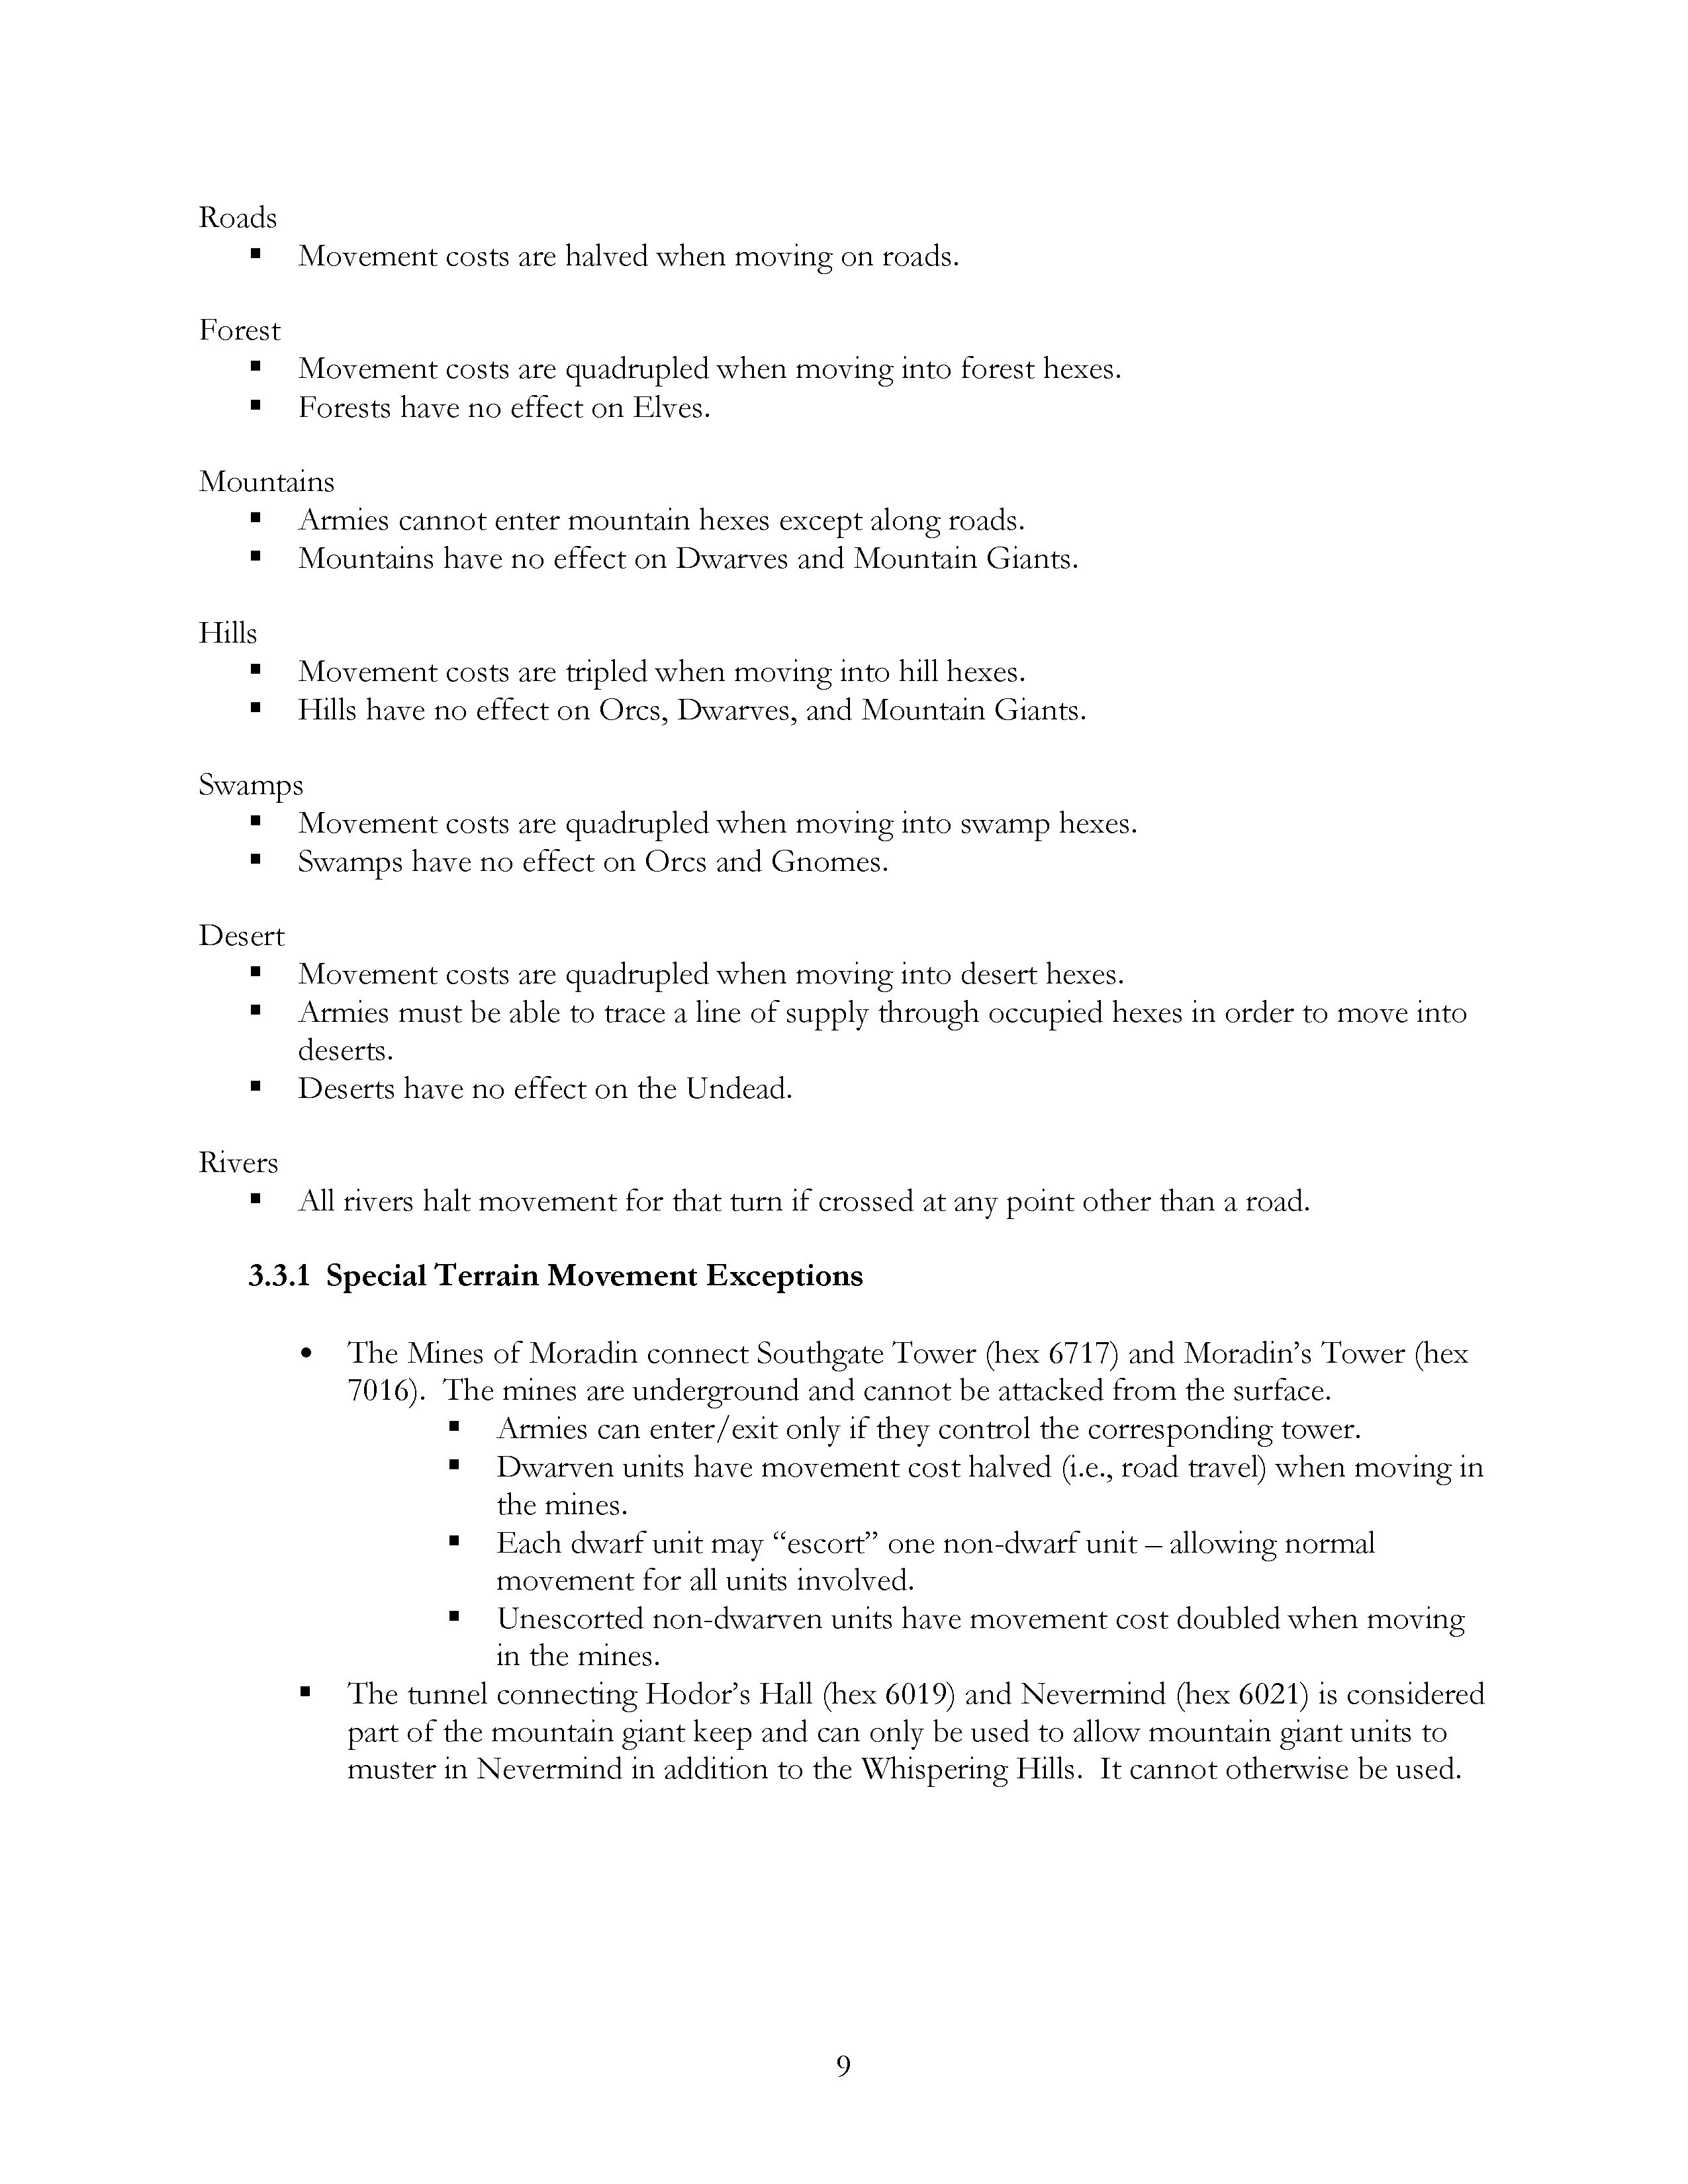 Witenagemot Rules 11 Page 10.jpg